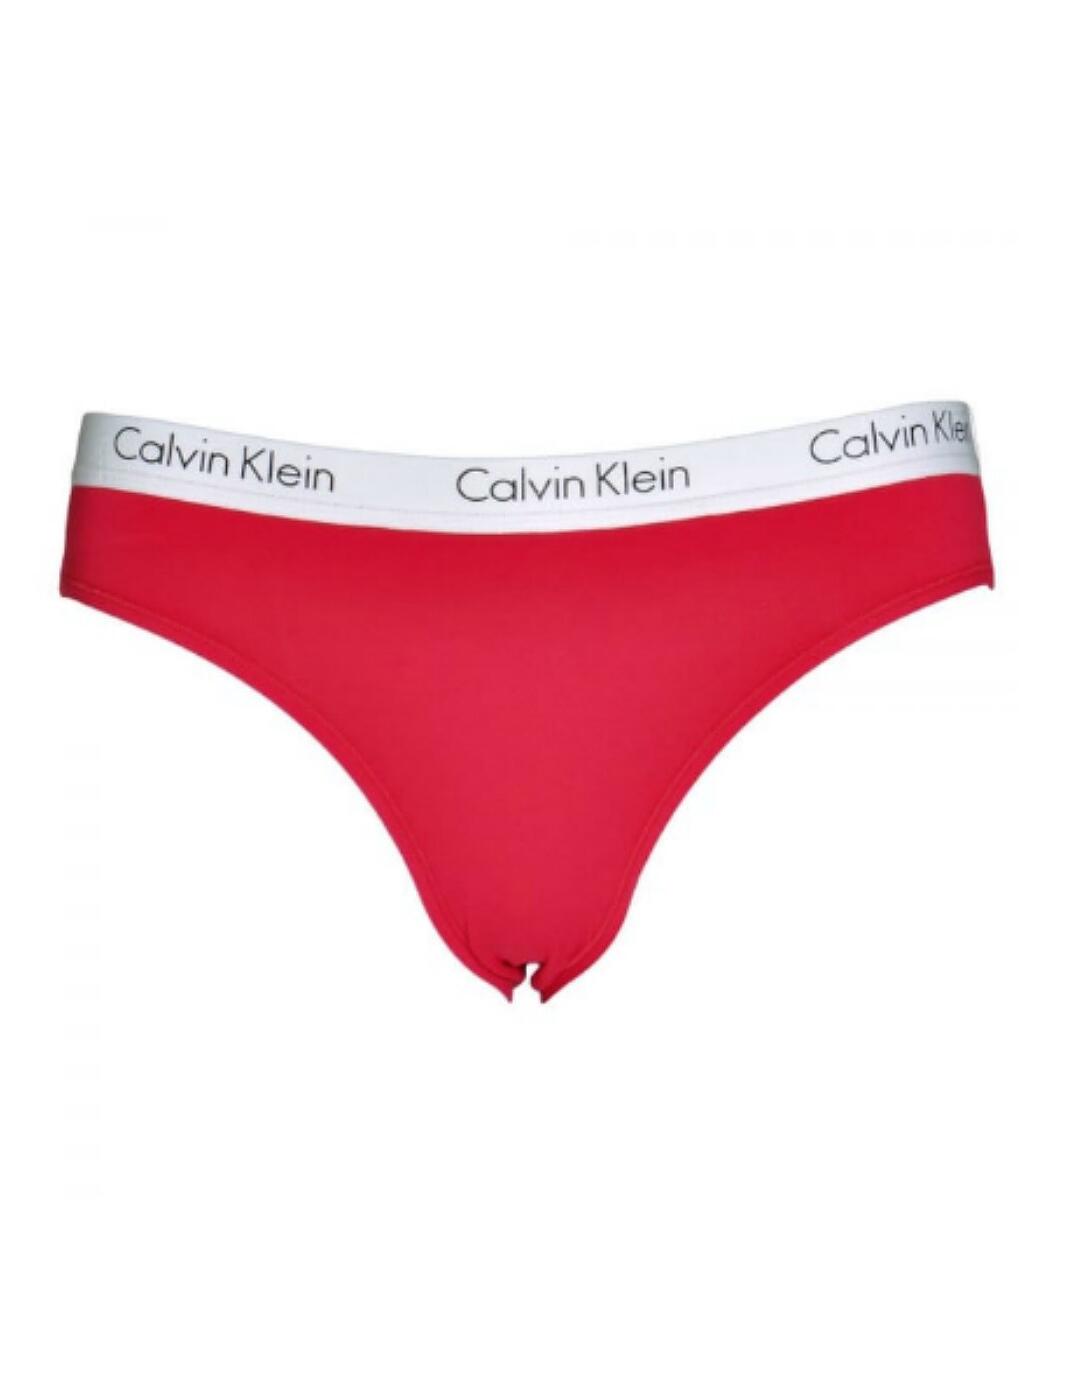 000QF1369 Calvin Klein Empower Bikini Style Brief - QF1369 Red